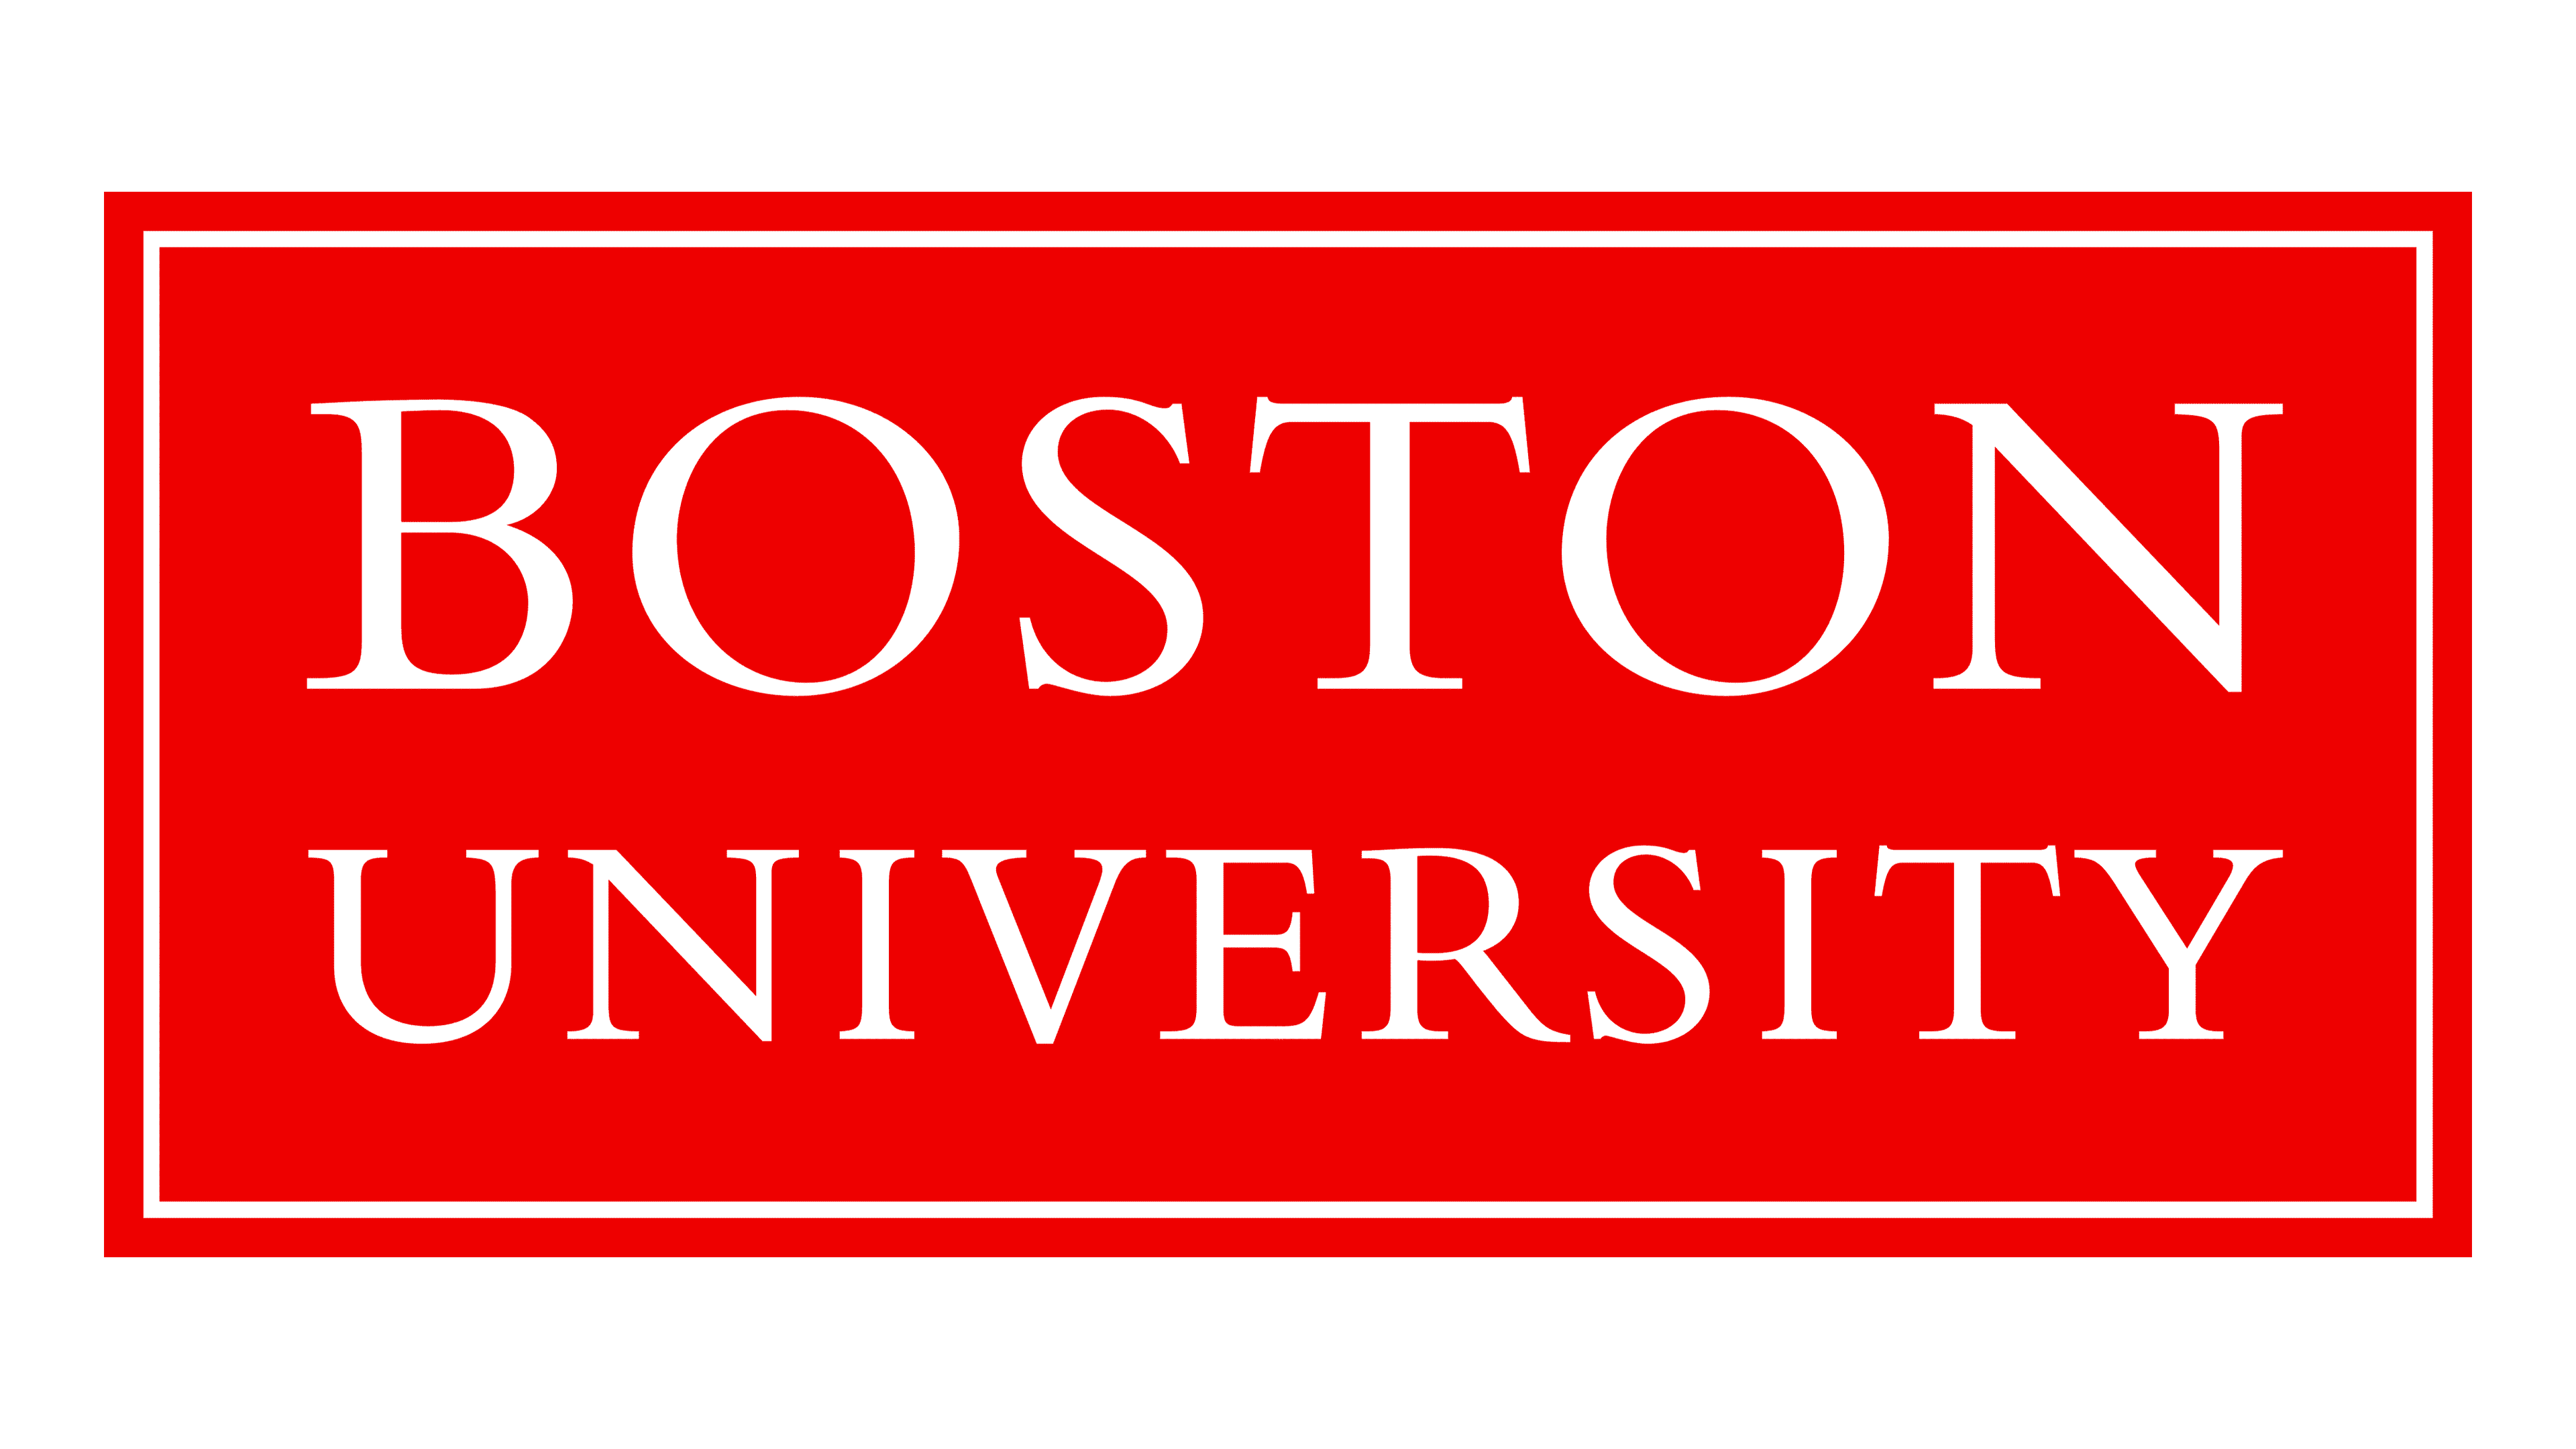 Boston University Transparent PNG Logo